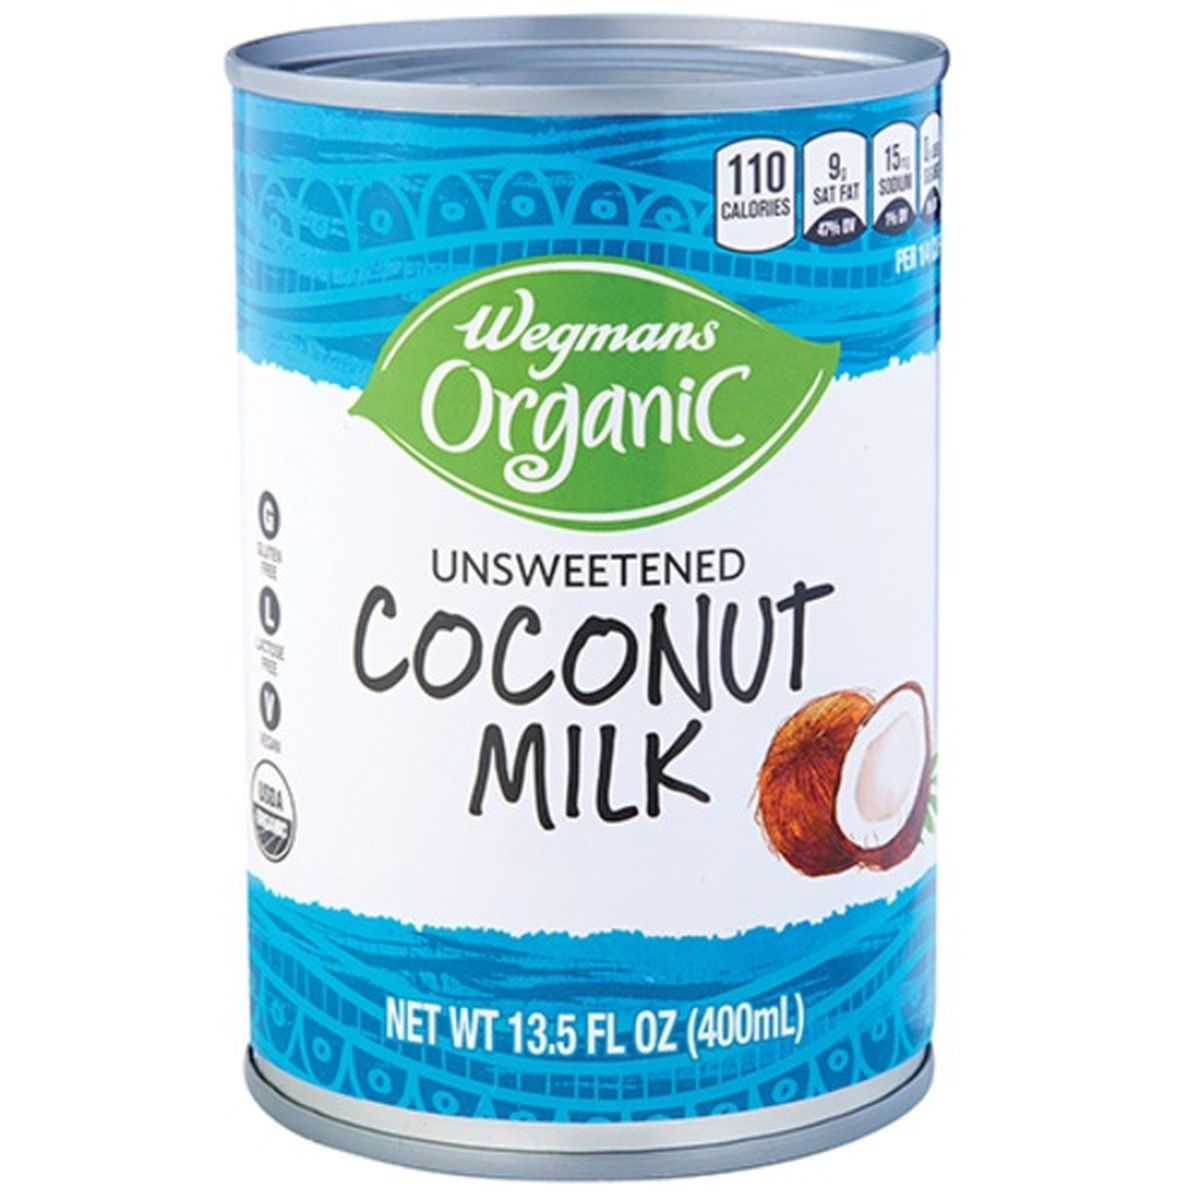 Calories in Wegmans Organic Unsweetened Coconut Milk